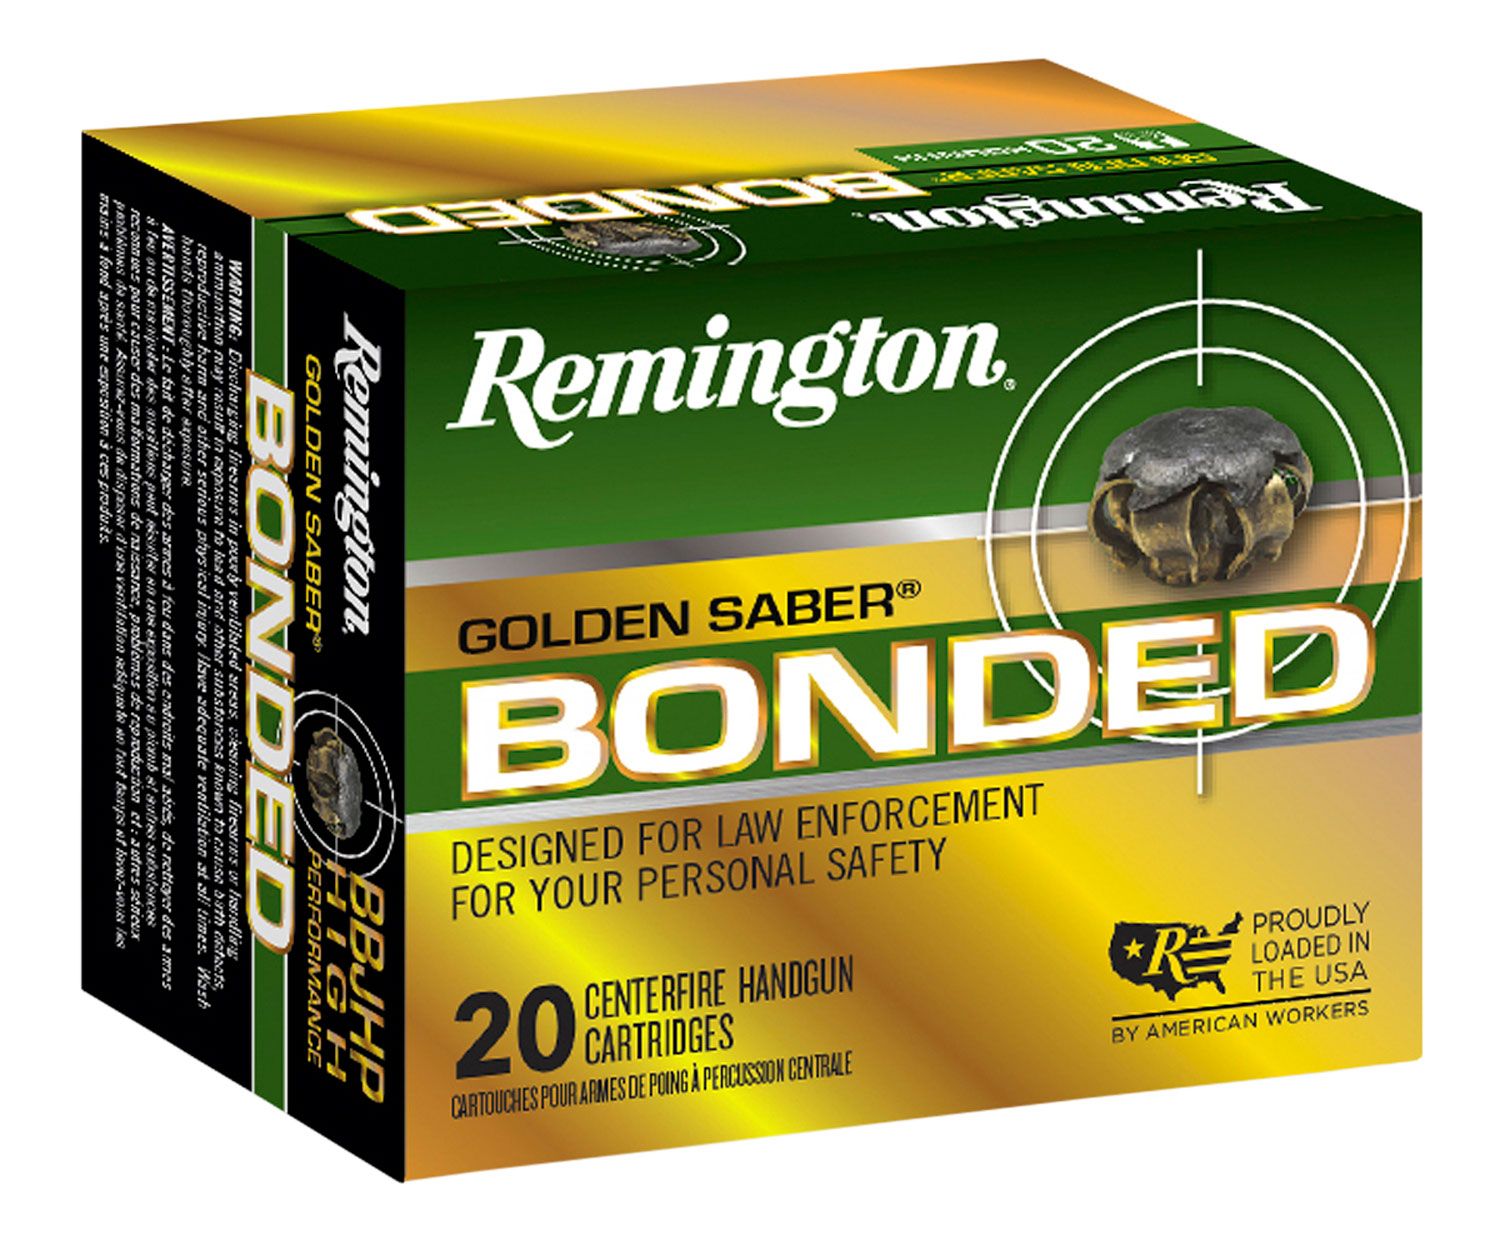 Remington Golden Saber Bonded Pistol Ammunition 29327, 45 ACP, Brass Jacket Hollow Point, 230 gr, 875 fps, 20 Rd/Bx